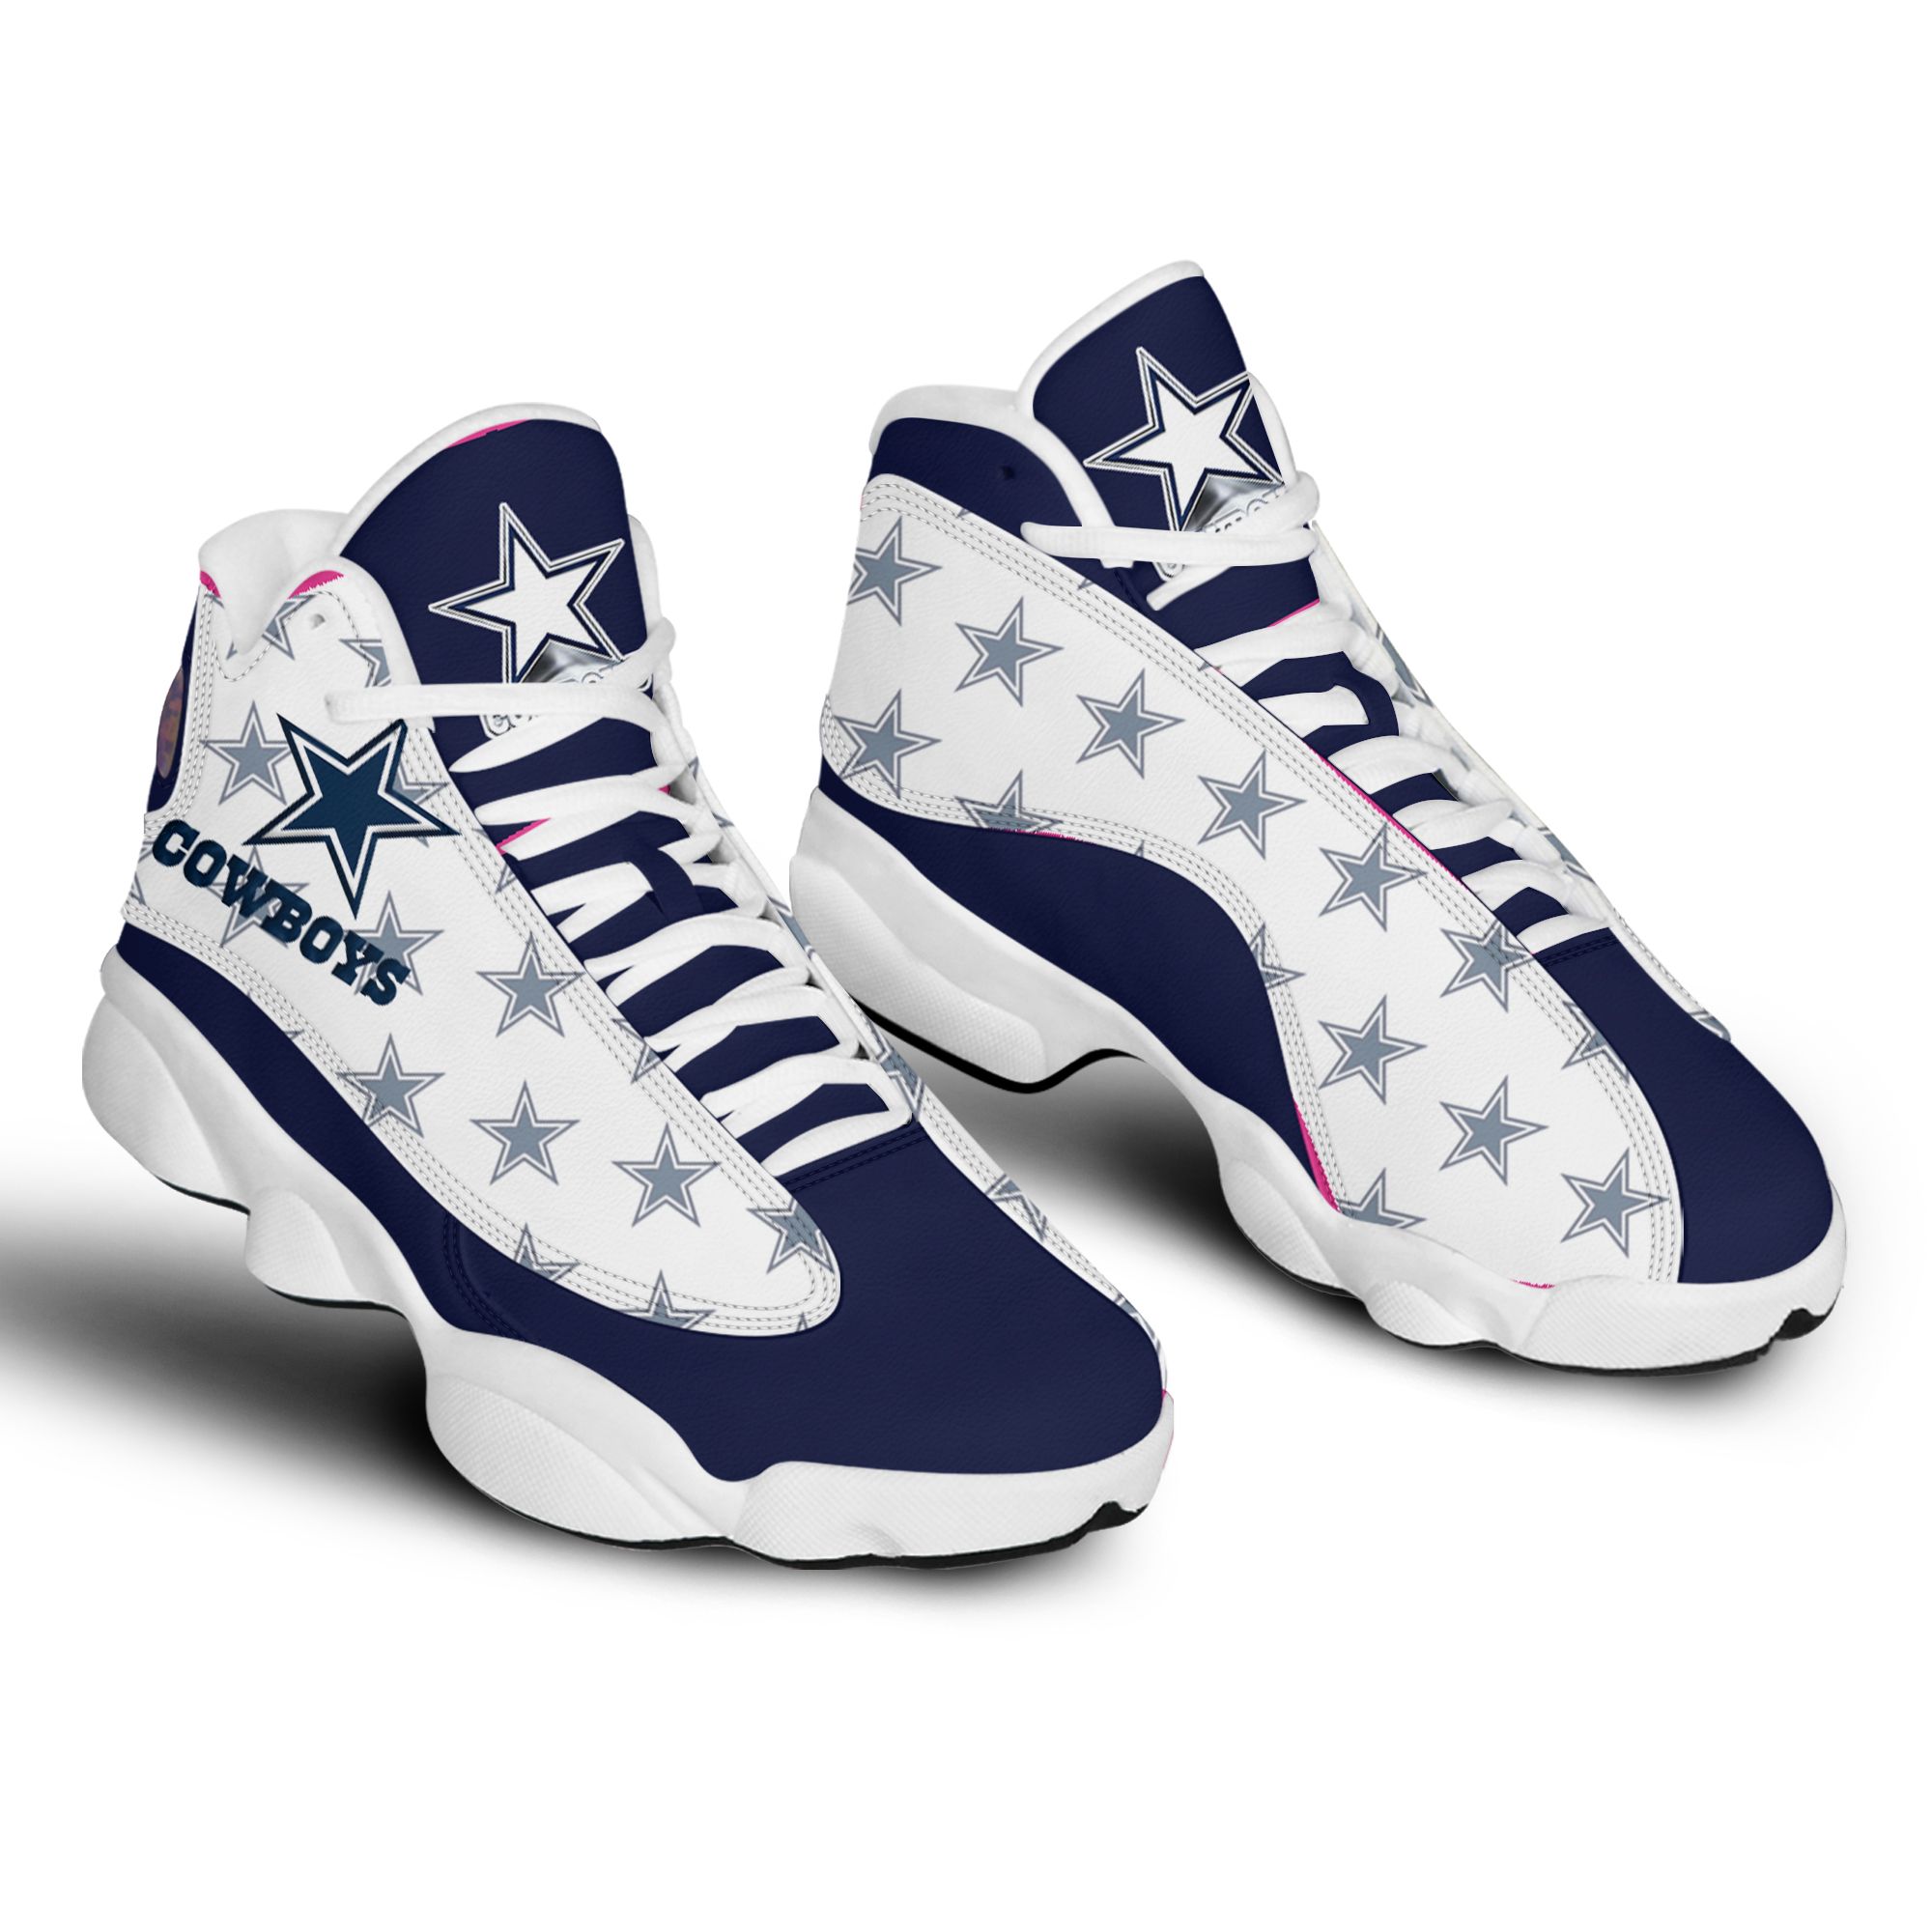 Dallas cowboys football air jordan 13 sneakers personalized shoes for fan - men / us 7